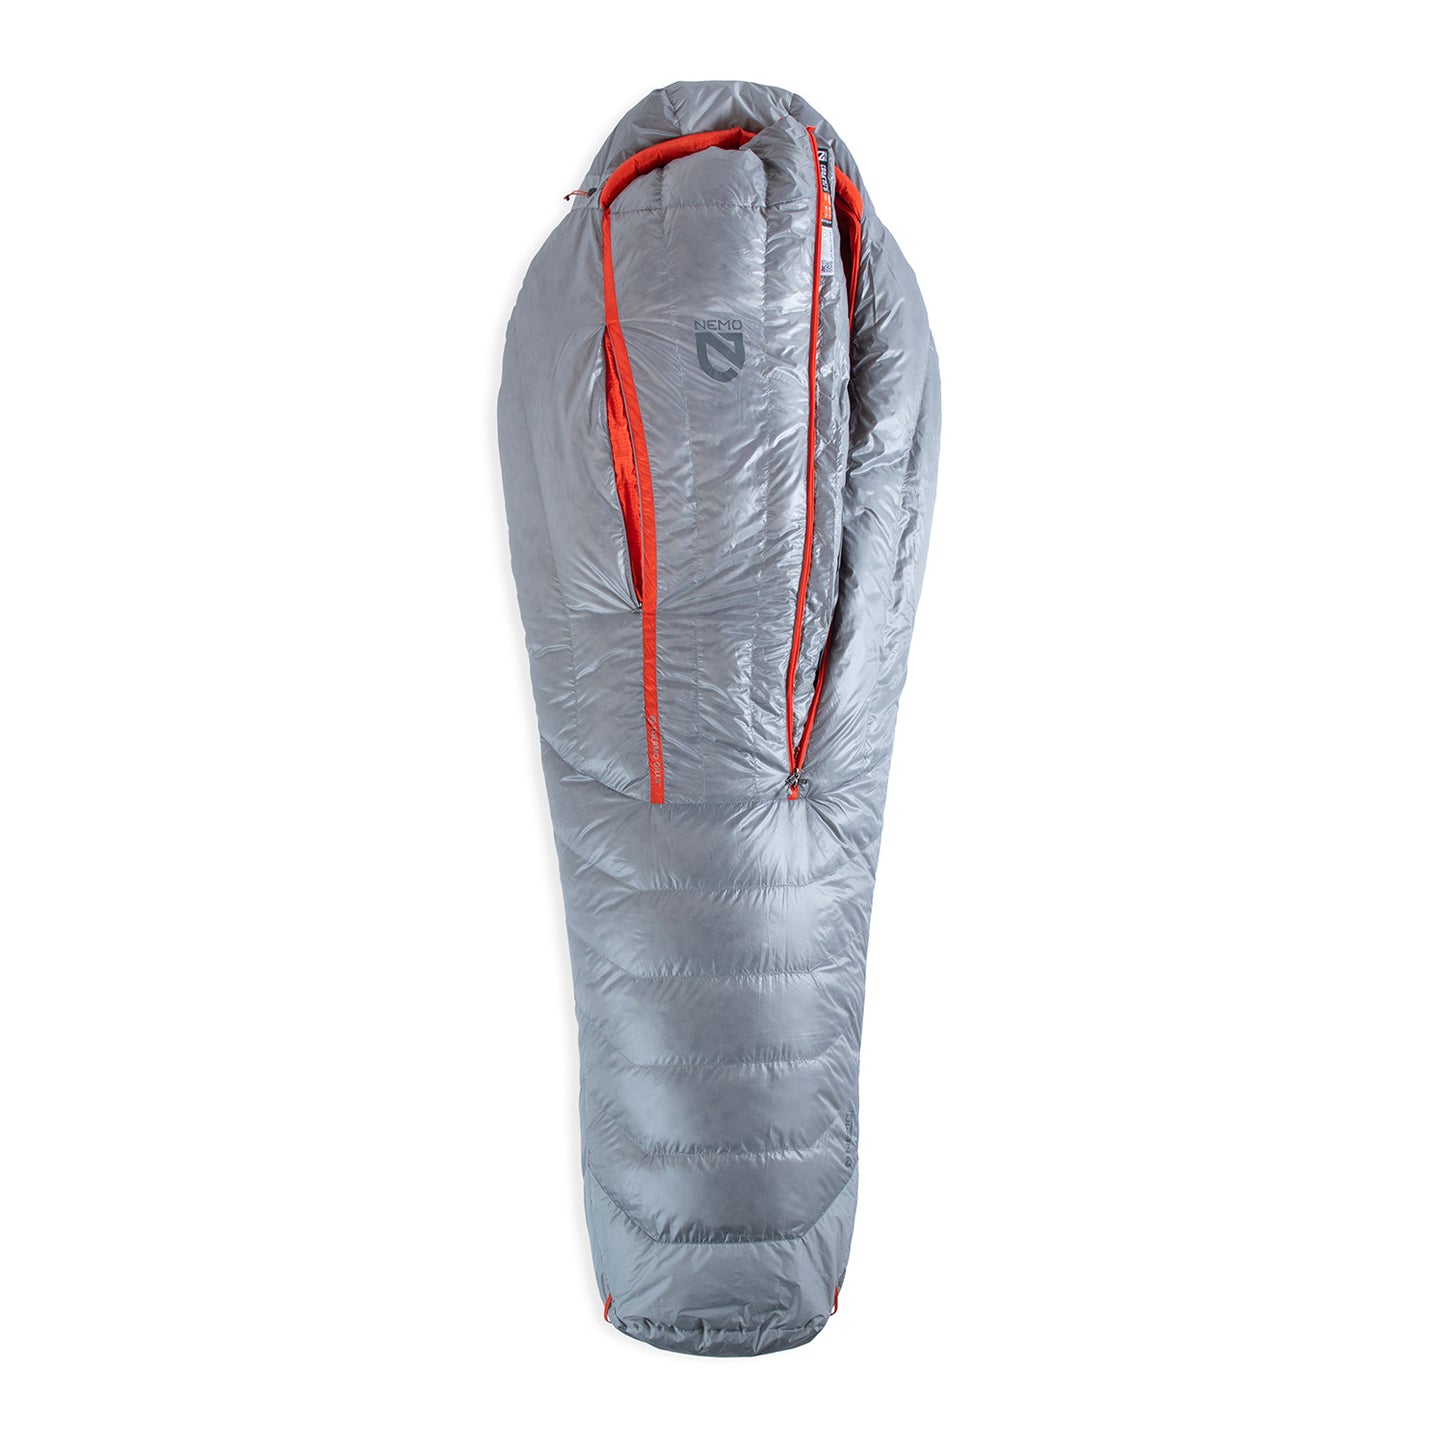 Nemo Coda Ultralight Down Sleeping Bag -2°C to 3°C